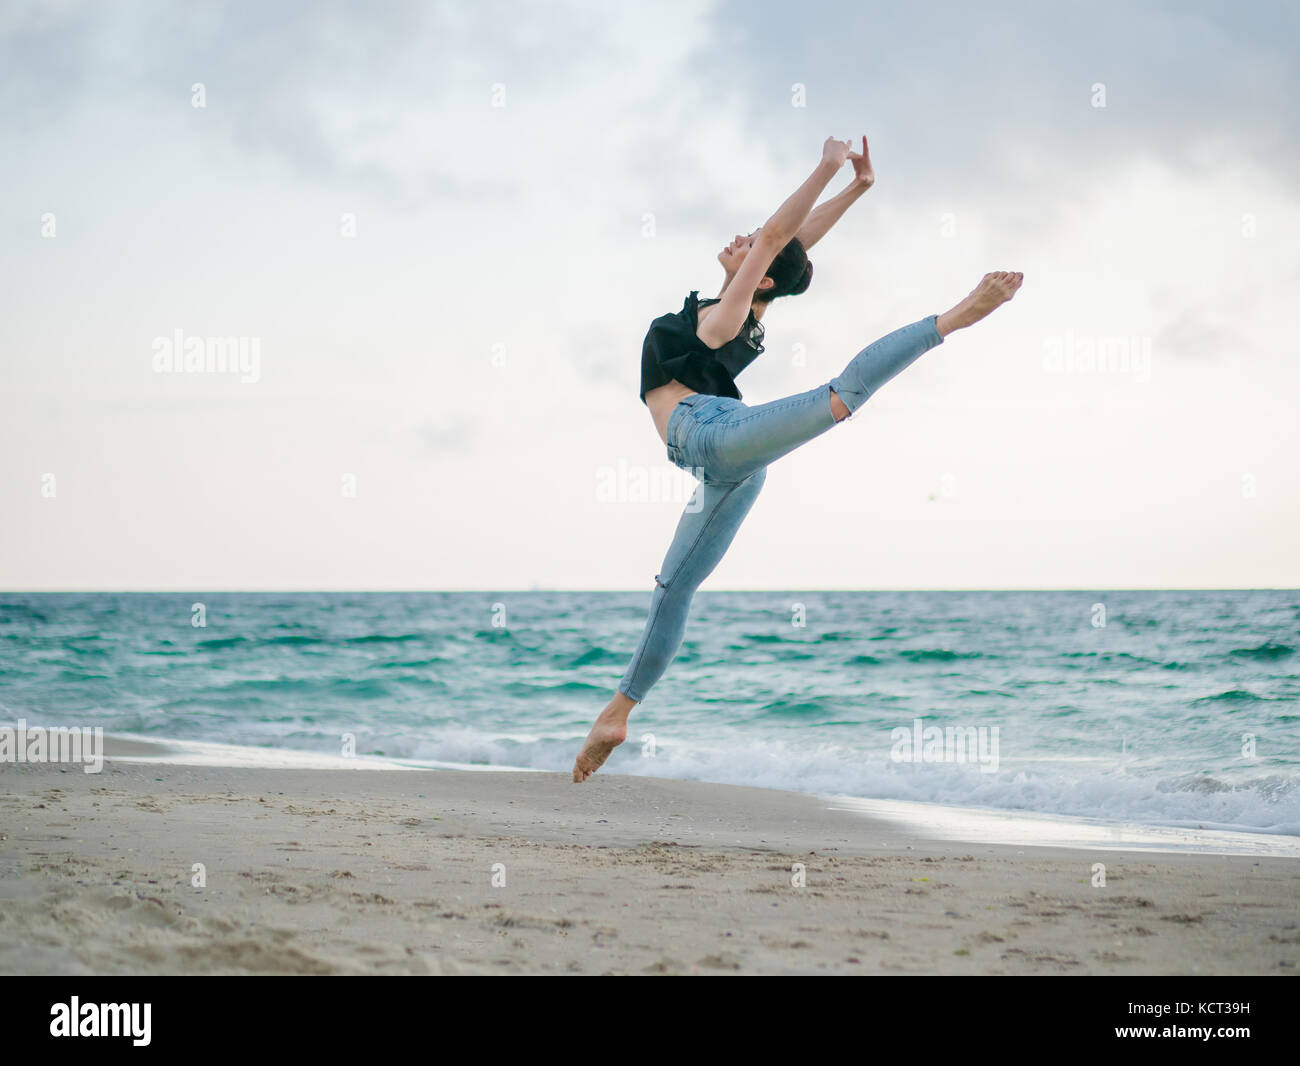 Ballerina jumping in river Stock Photo - Alamy